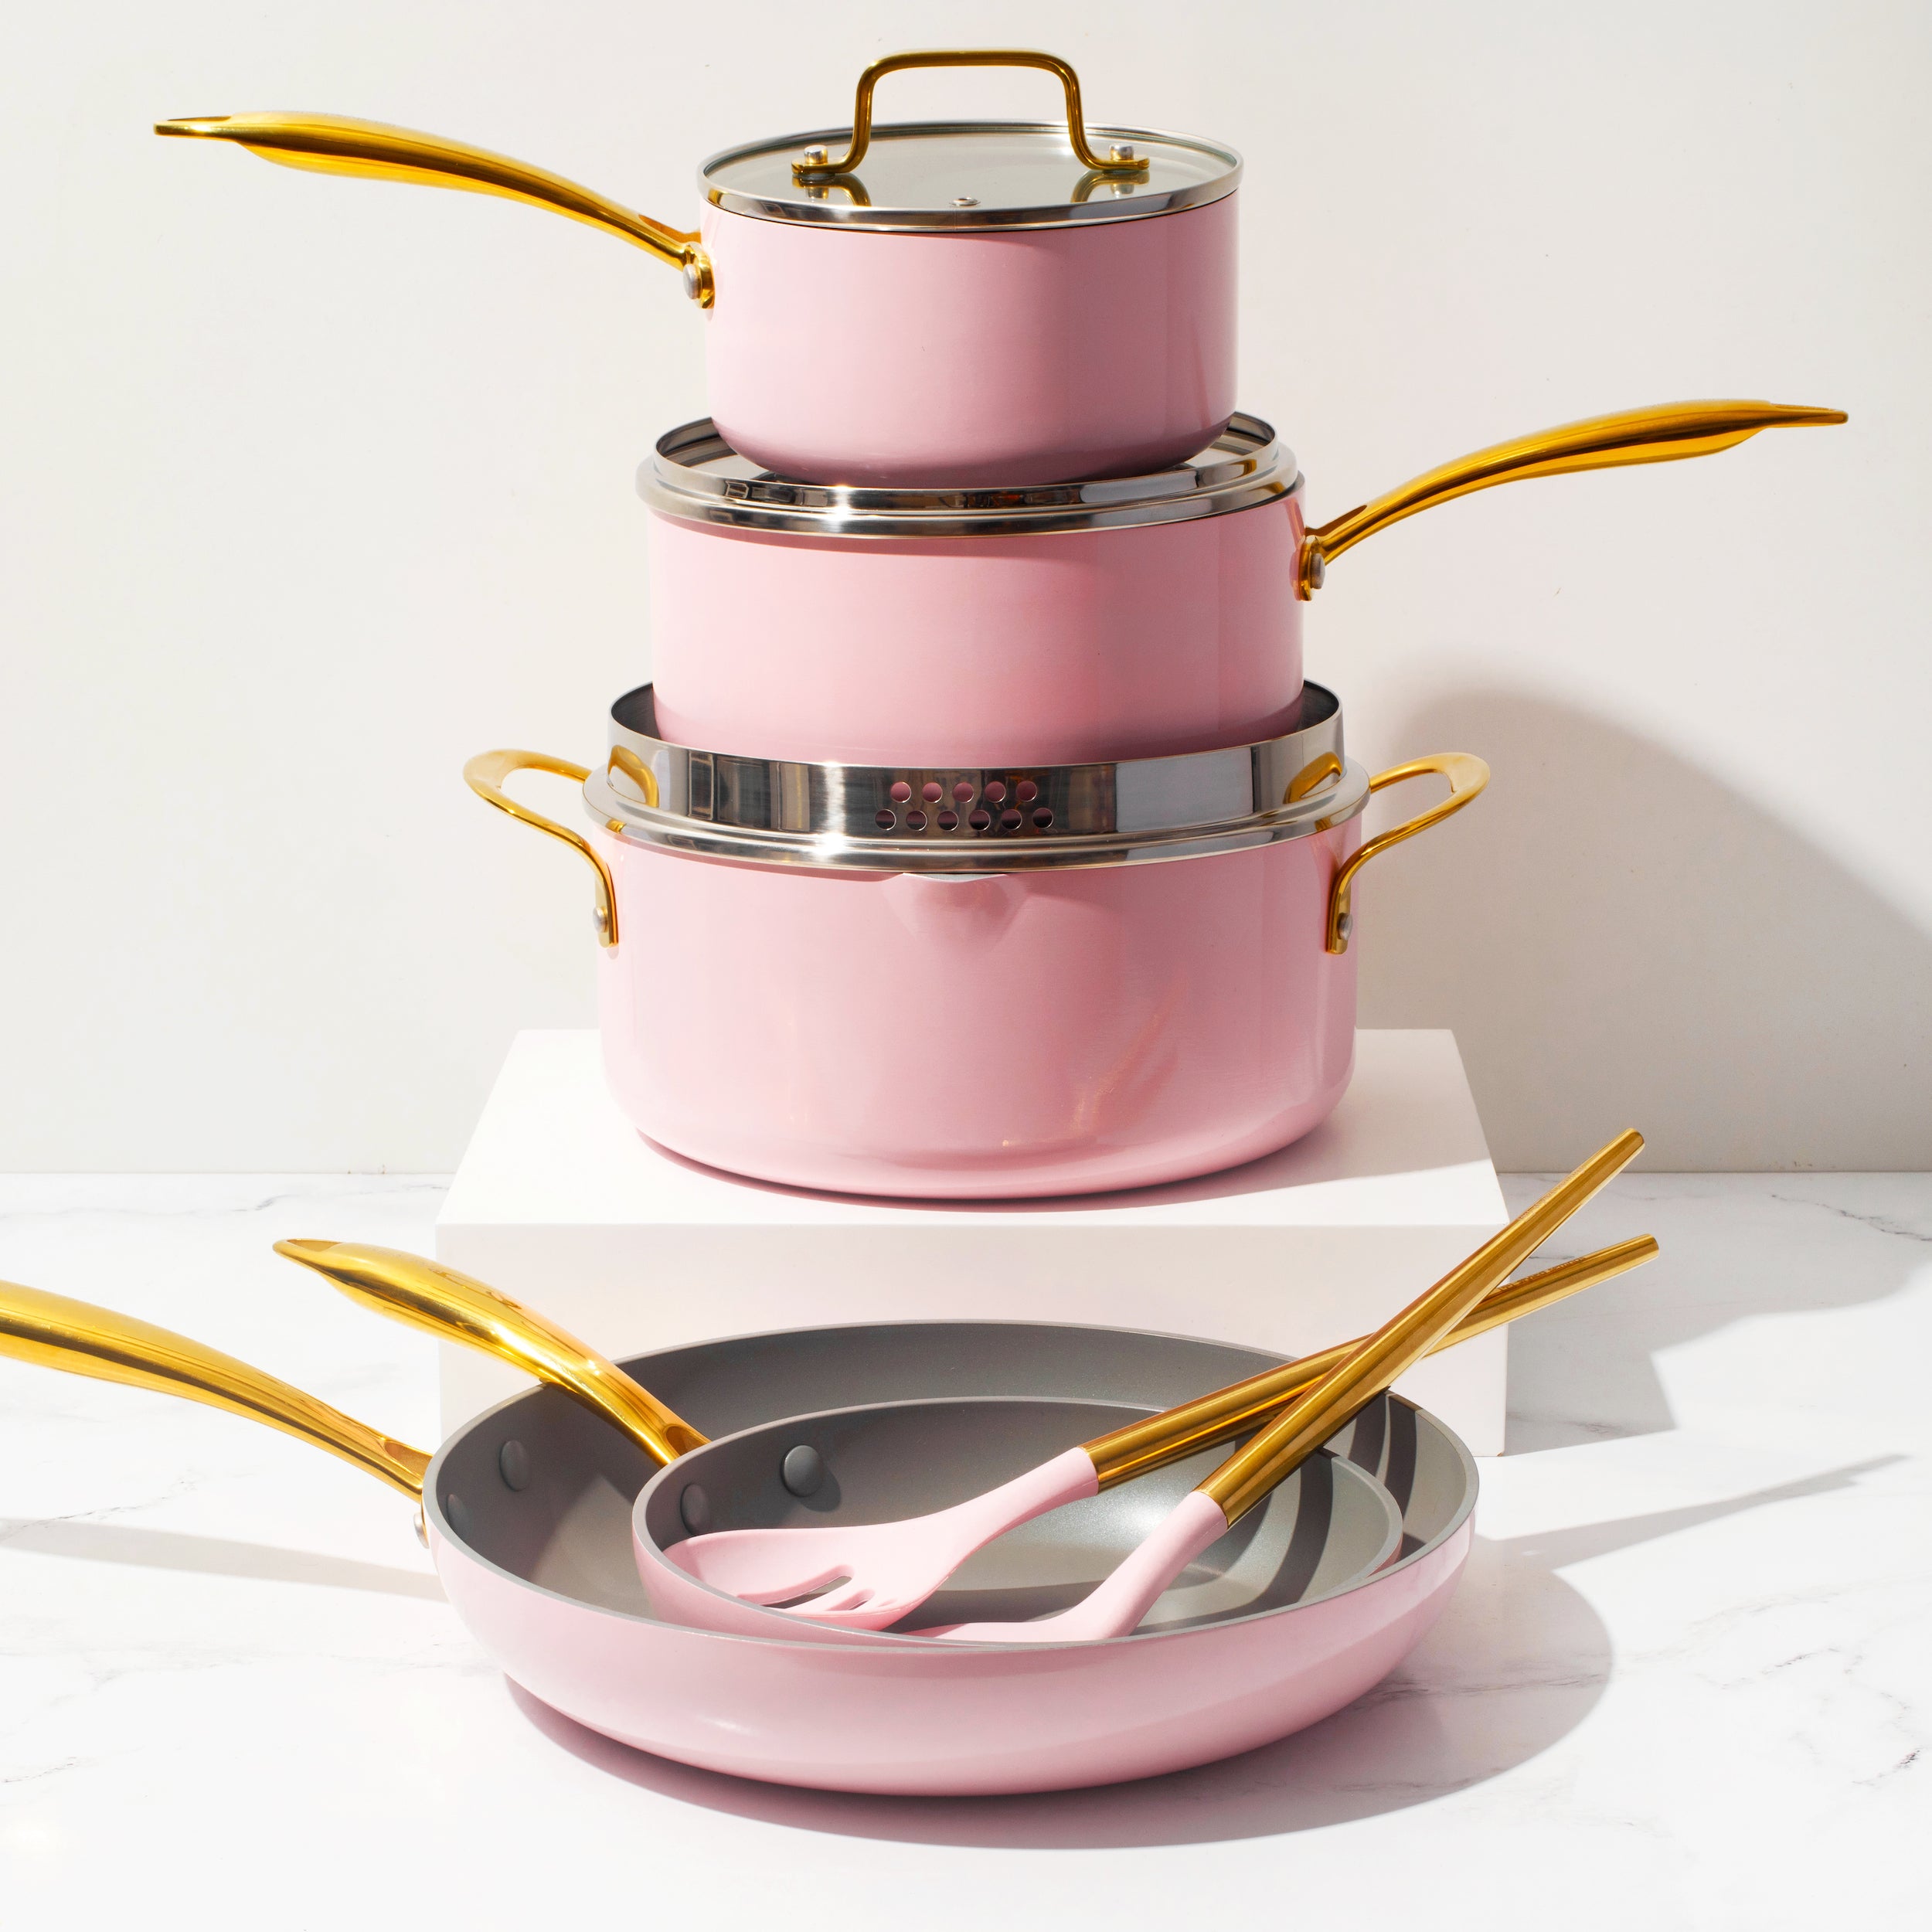 Nonstick Pans, Pots, and Nonstick Cookware Sets